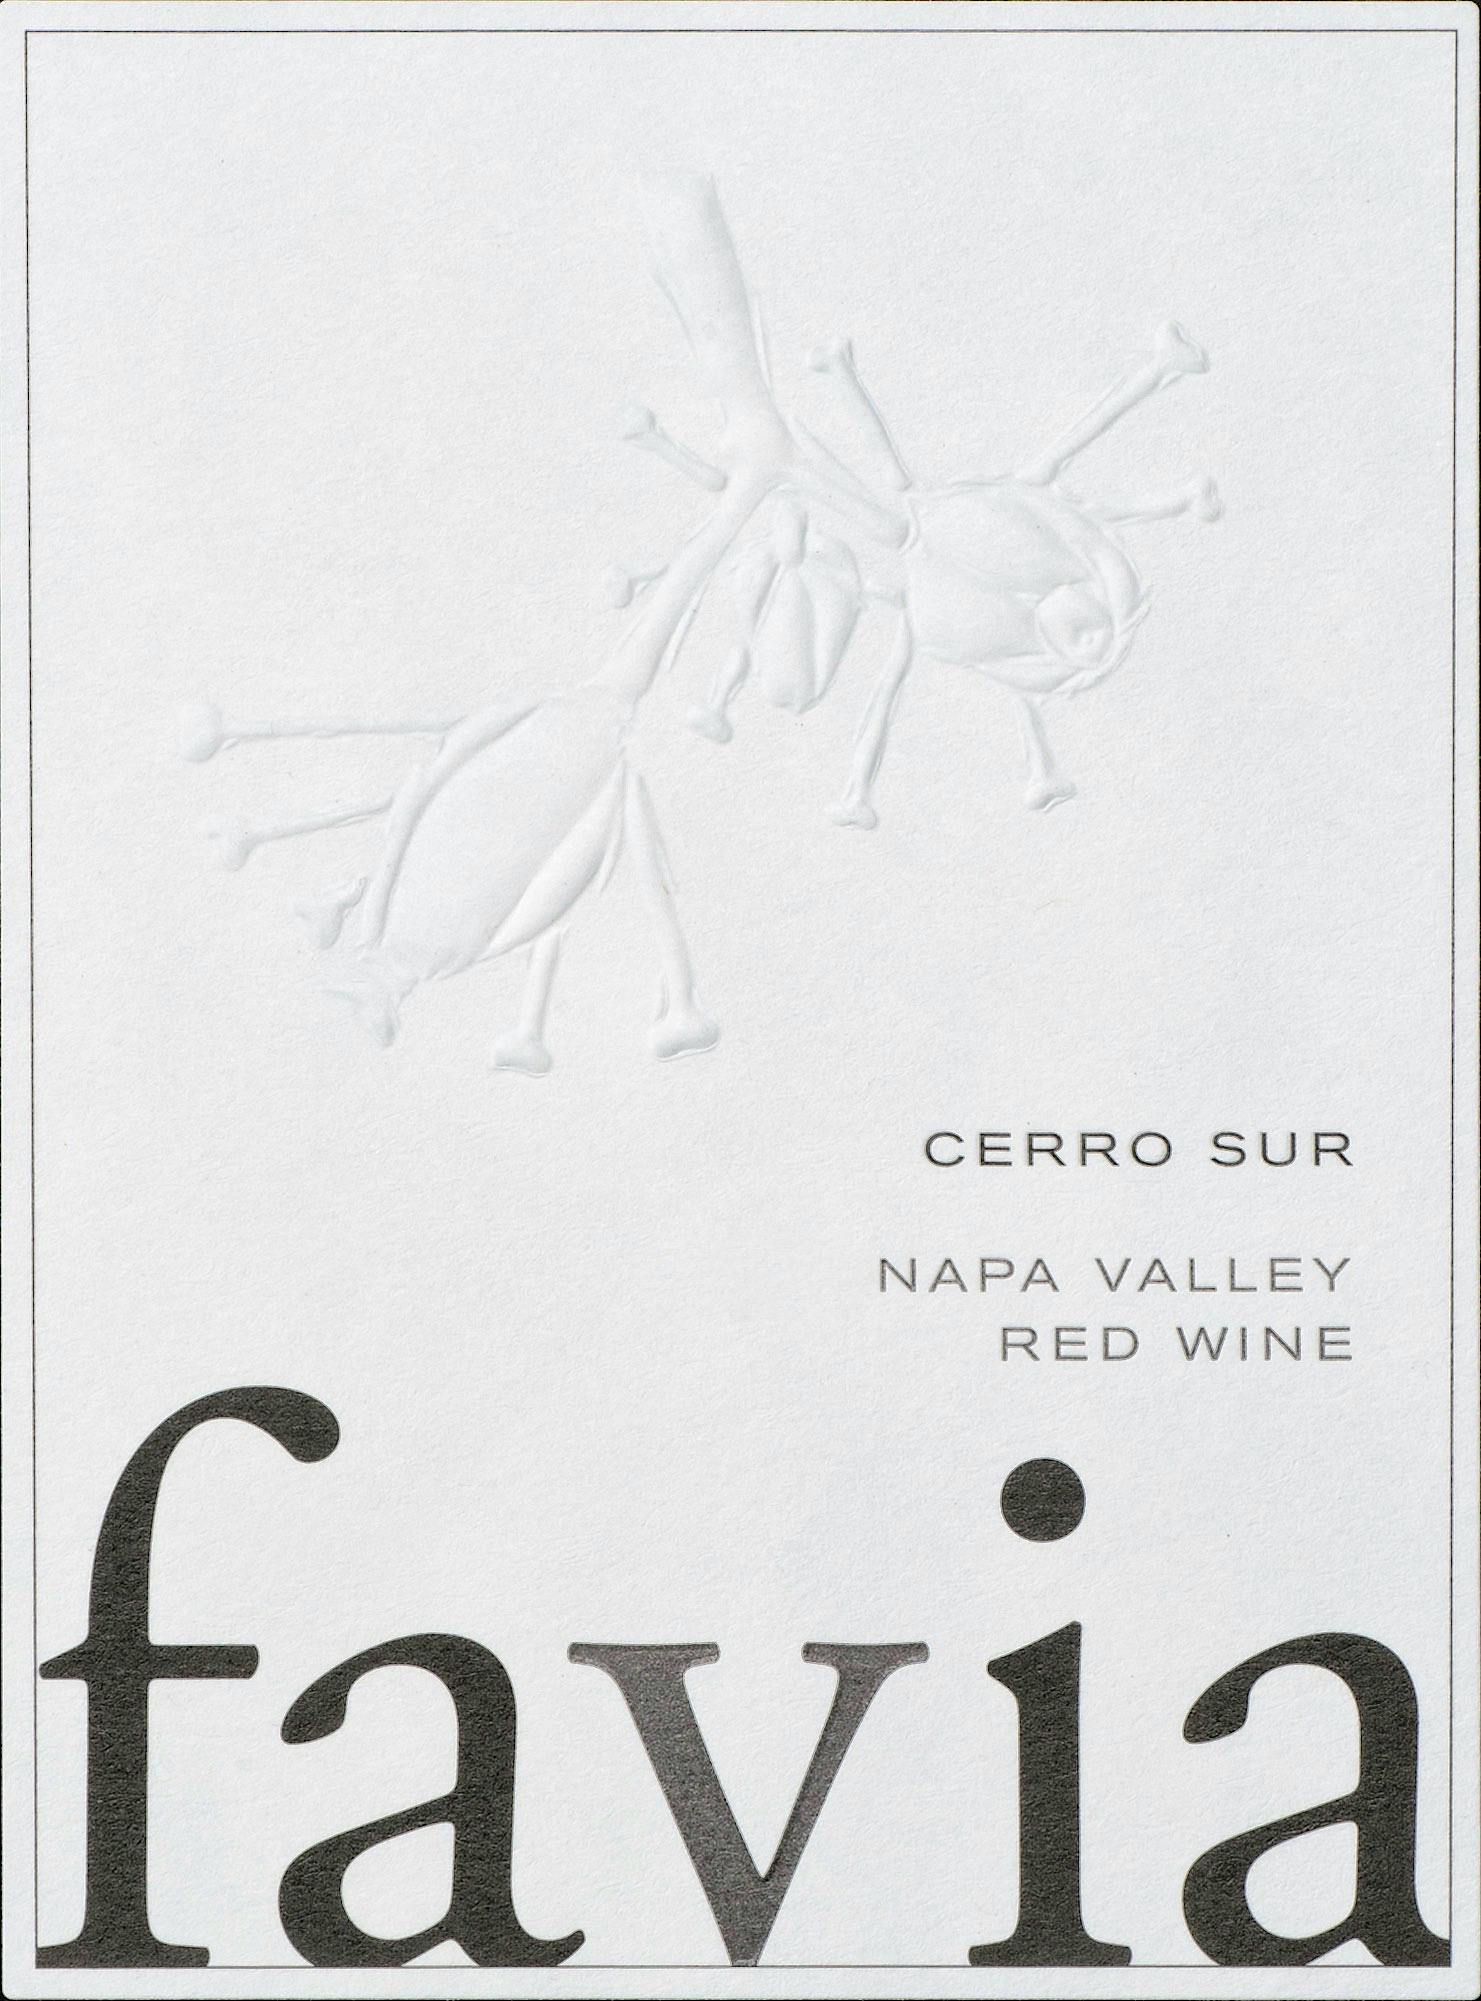 Label for Favia